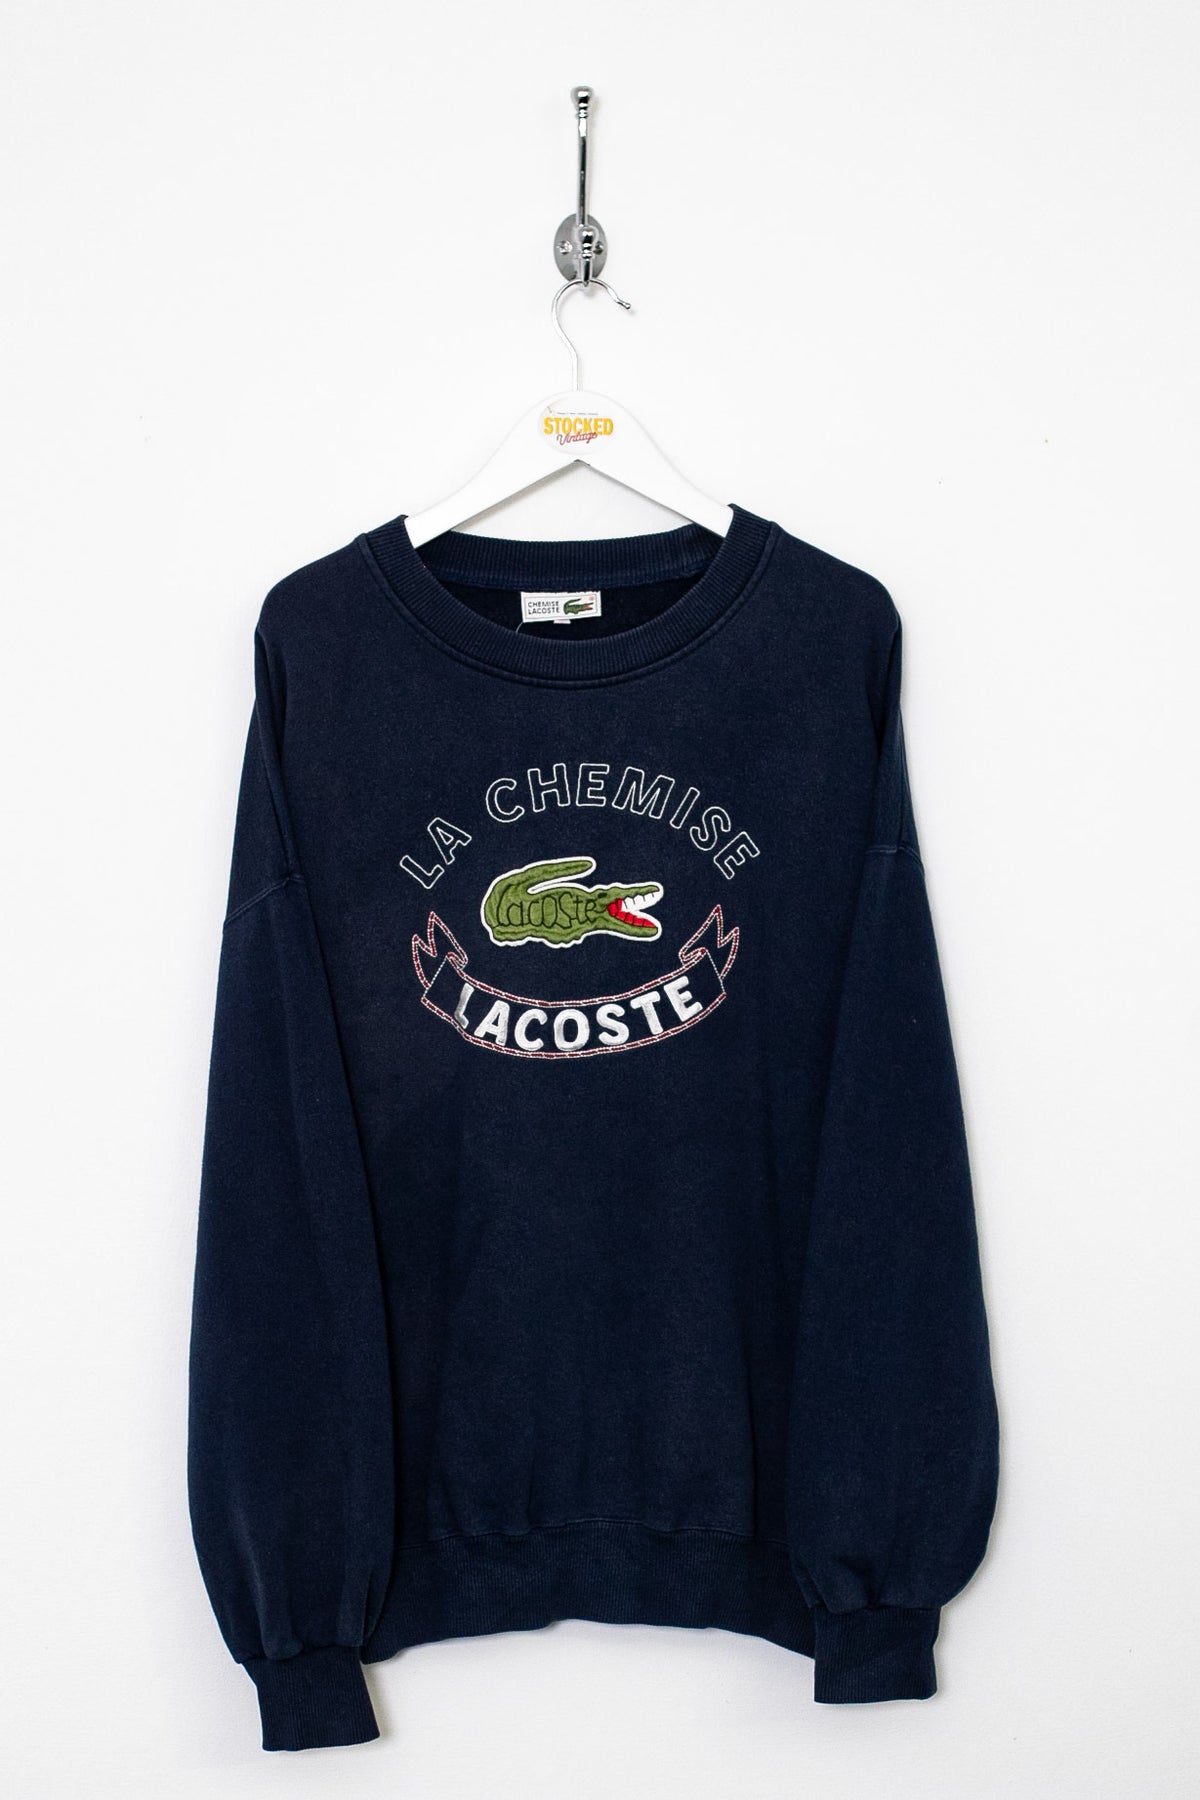 90s Lacoste Sweatshirt (M)